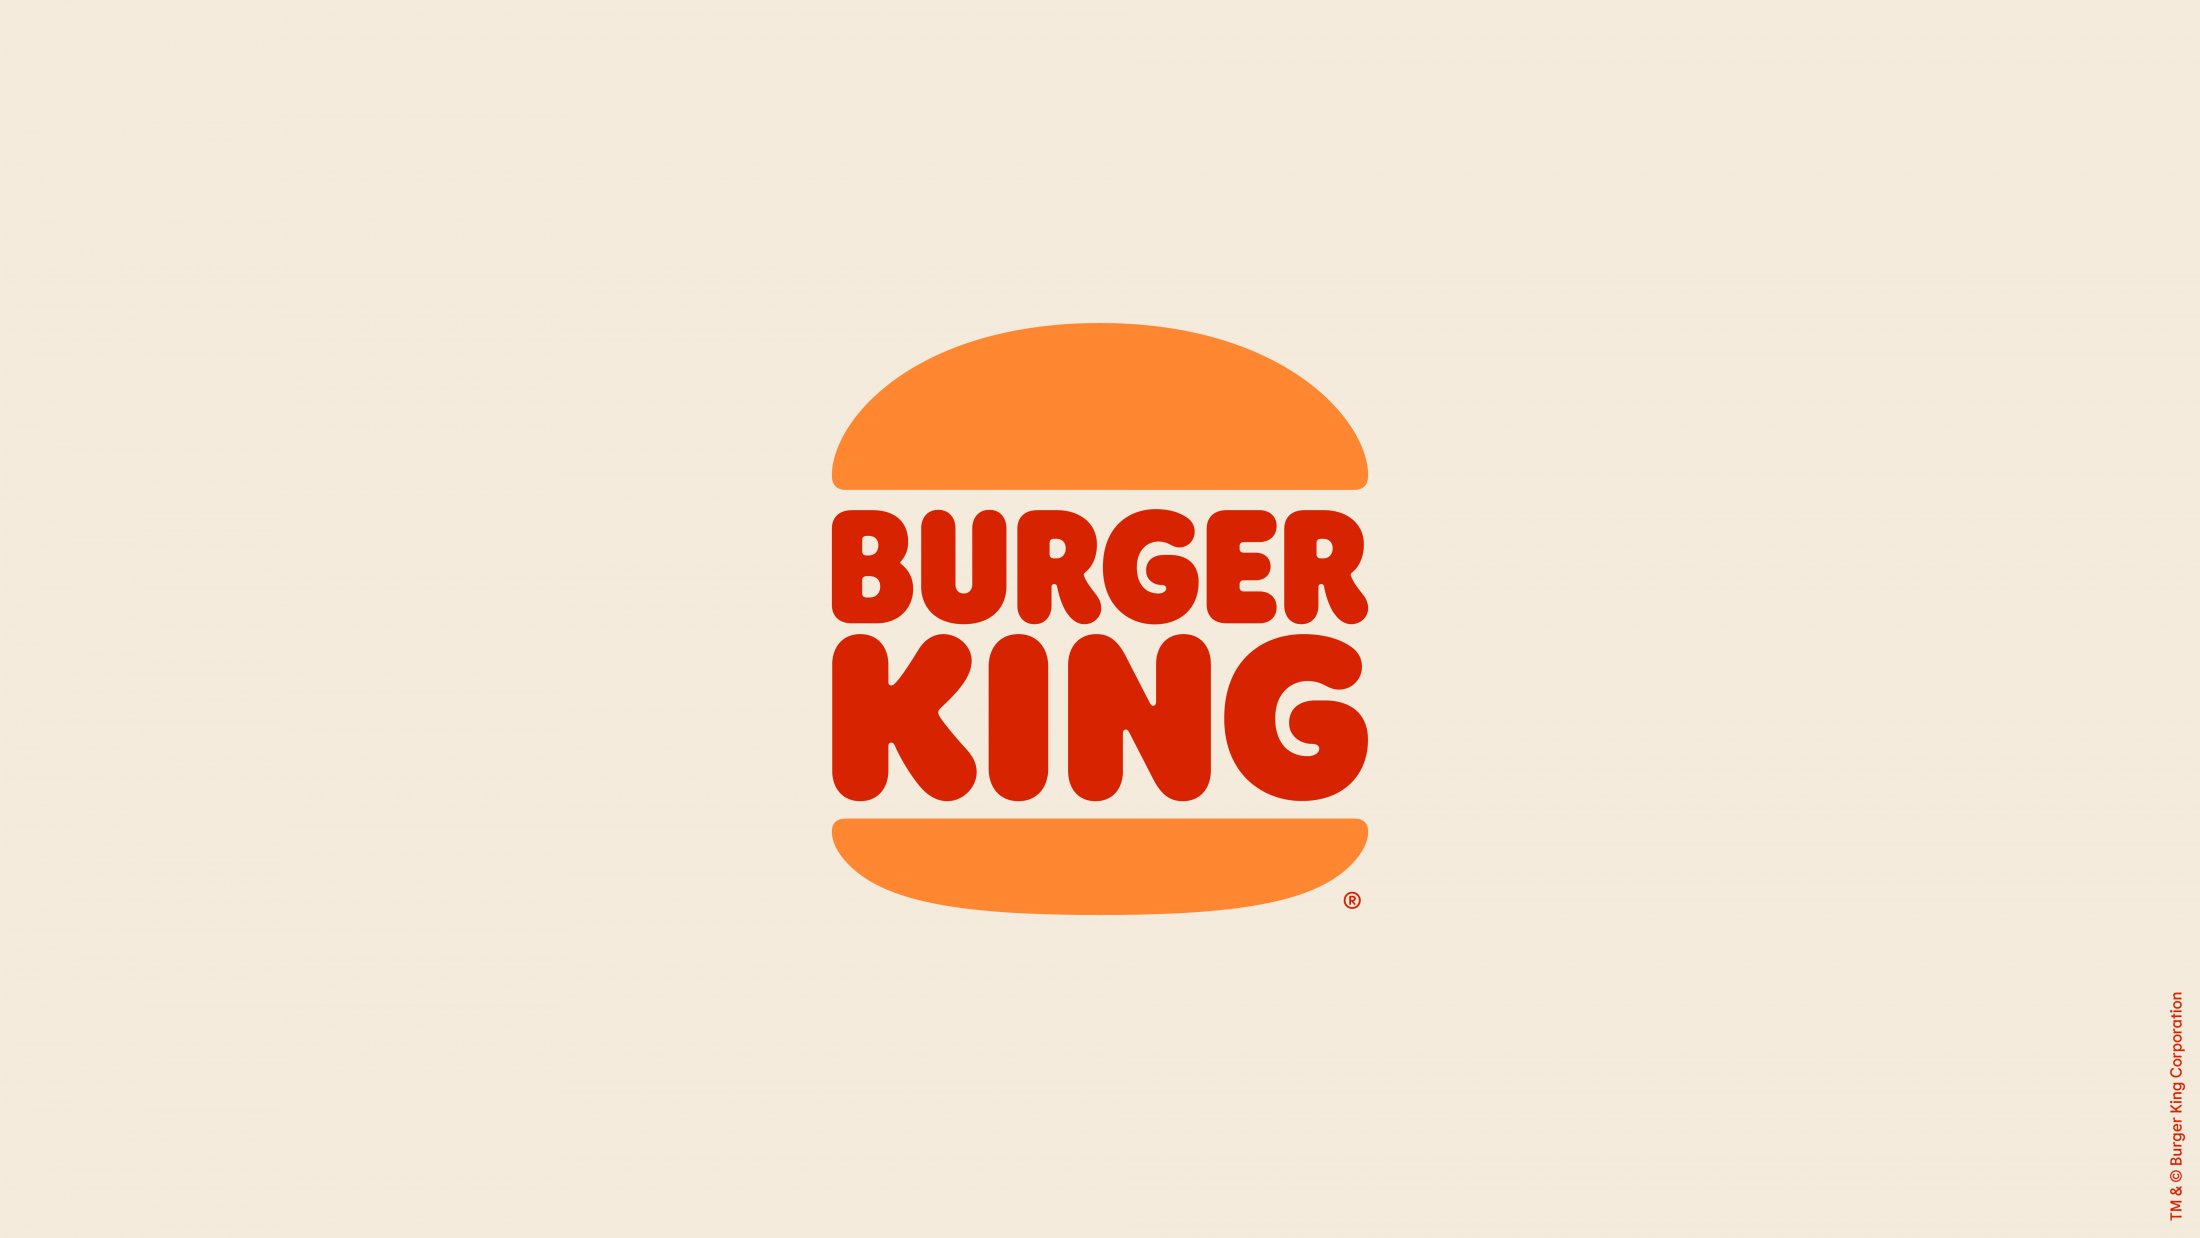 mejores-logos-2021-2022-burguer-king-01